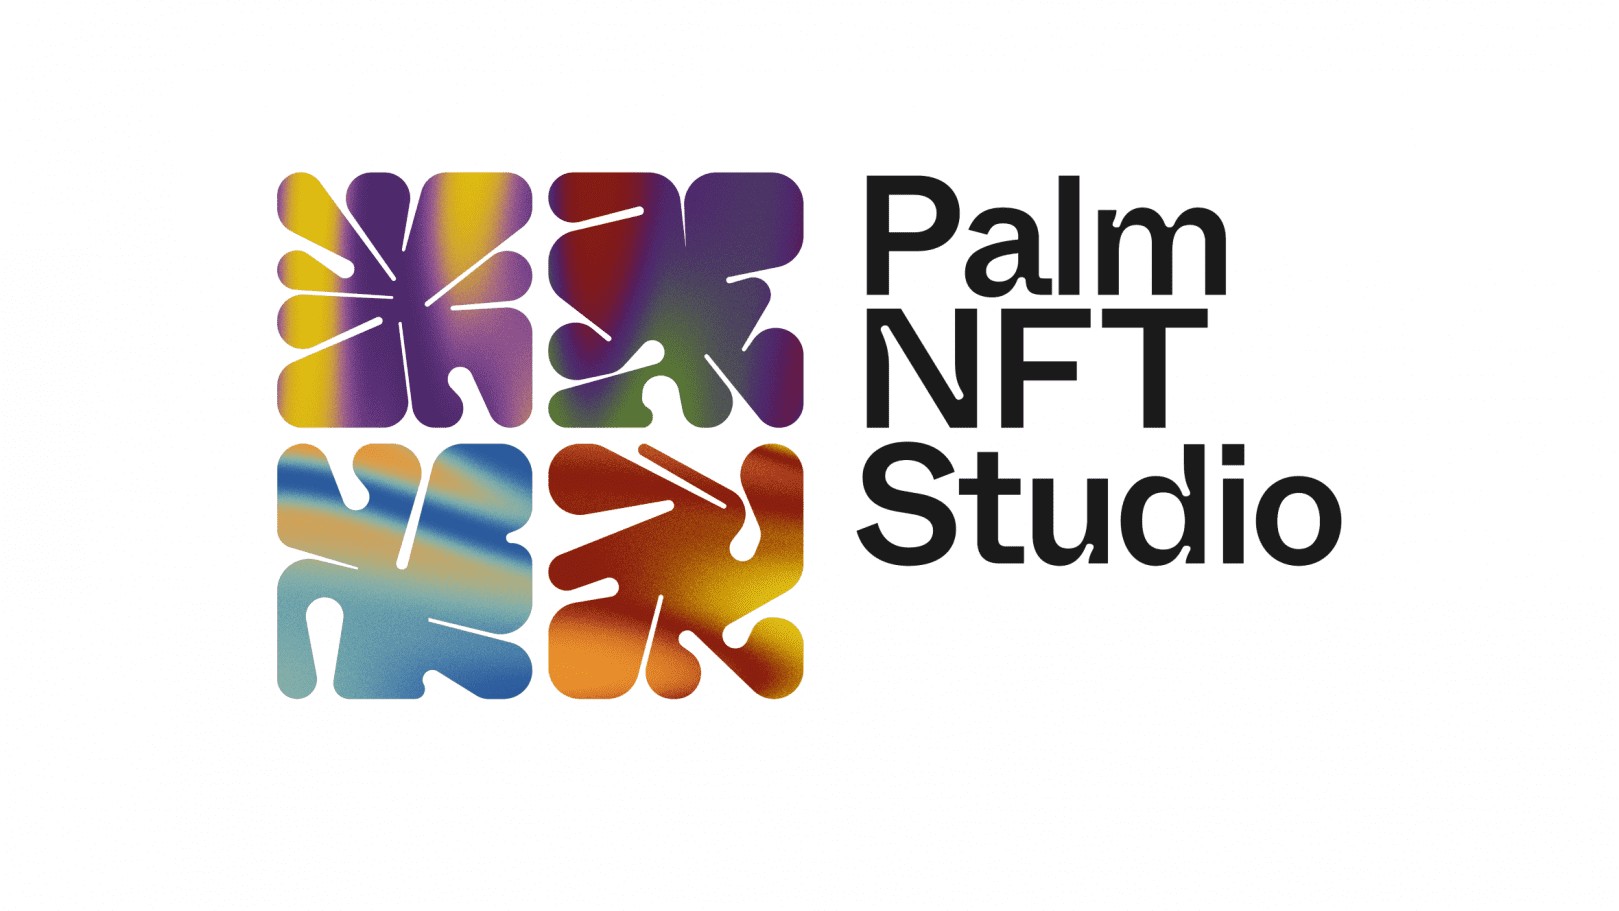 microsoft palm nft studioya 27 milyon dolarlik yatirim yapti 1